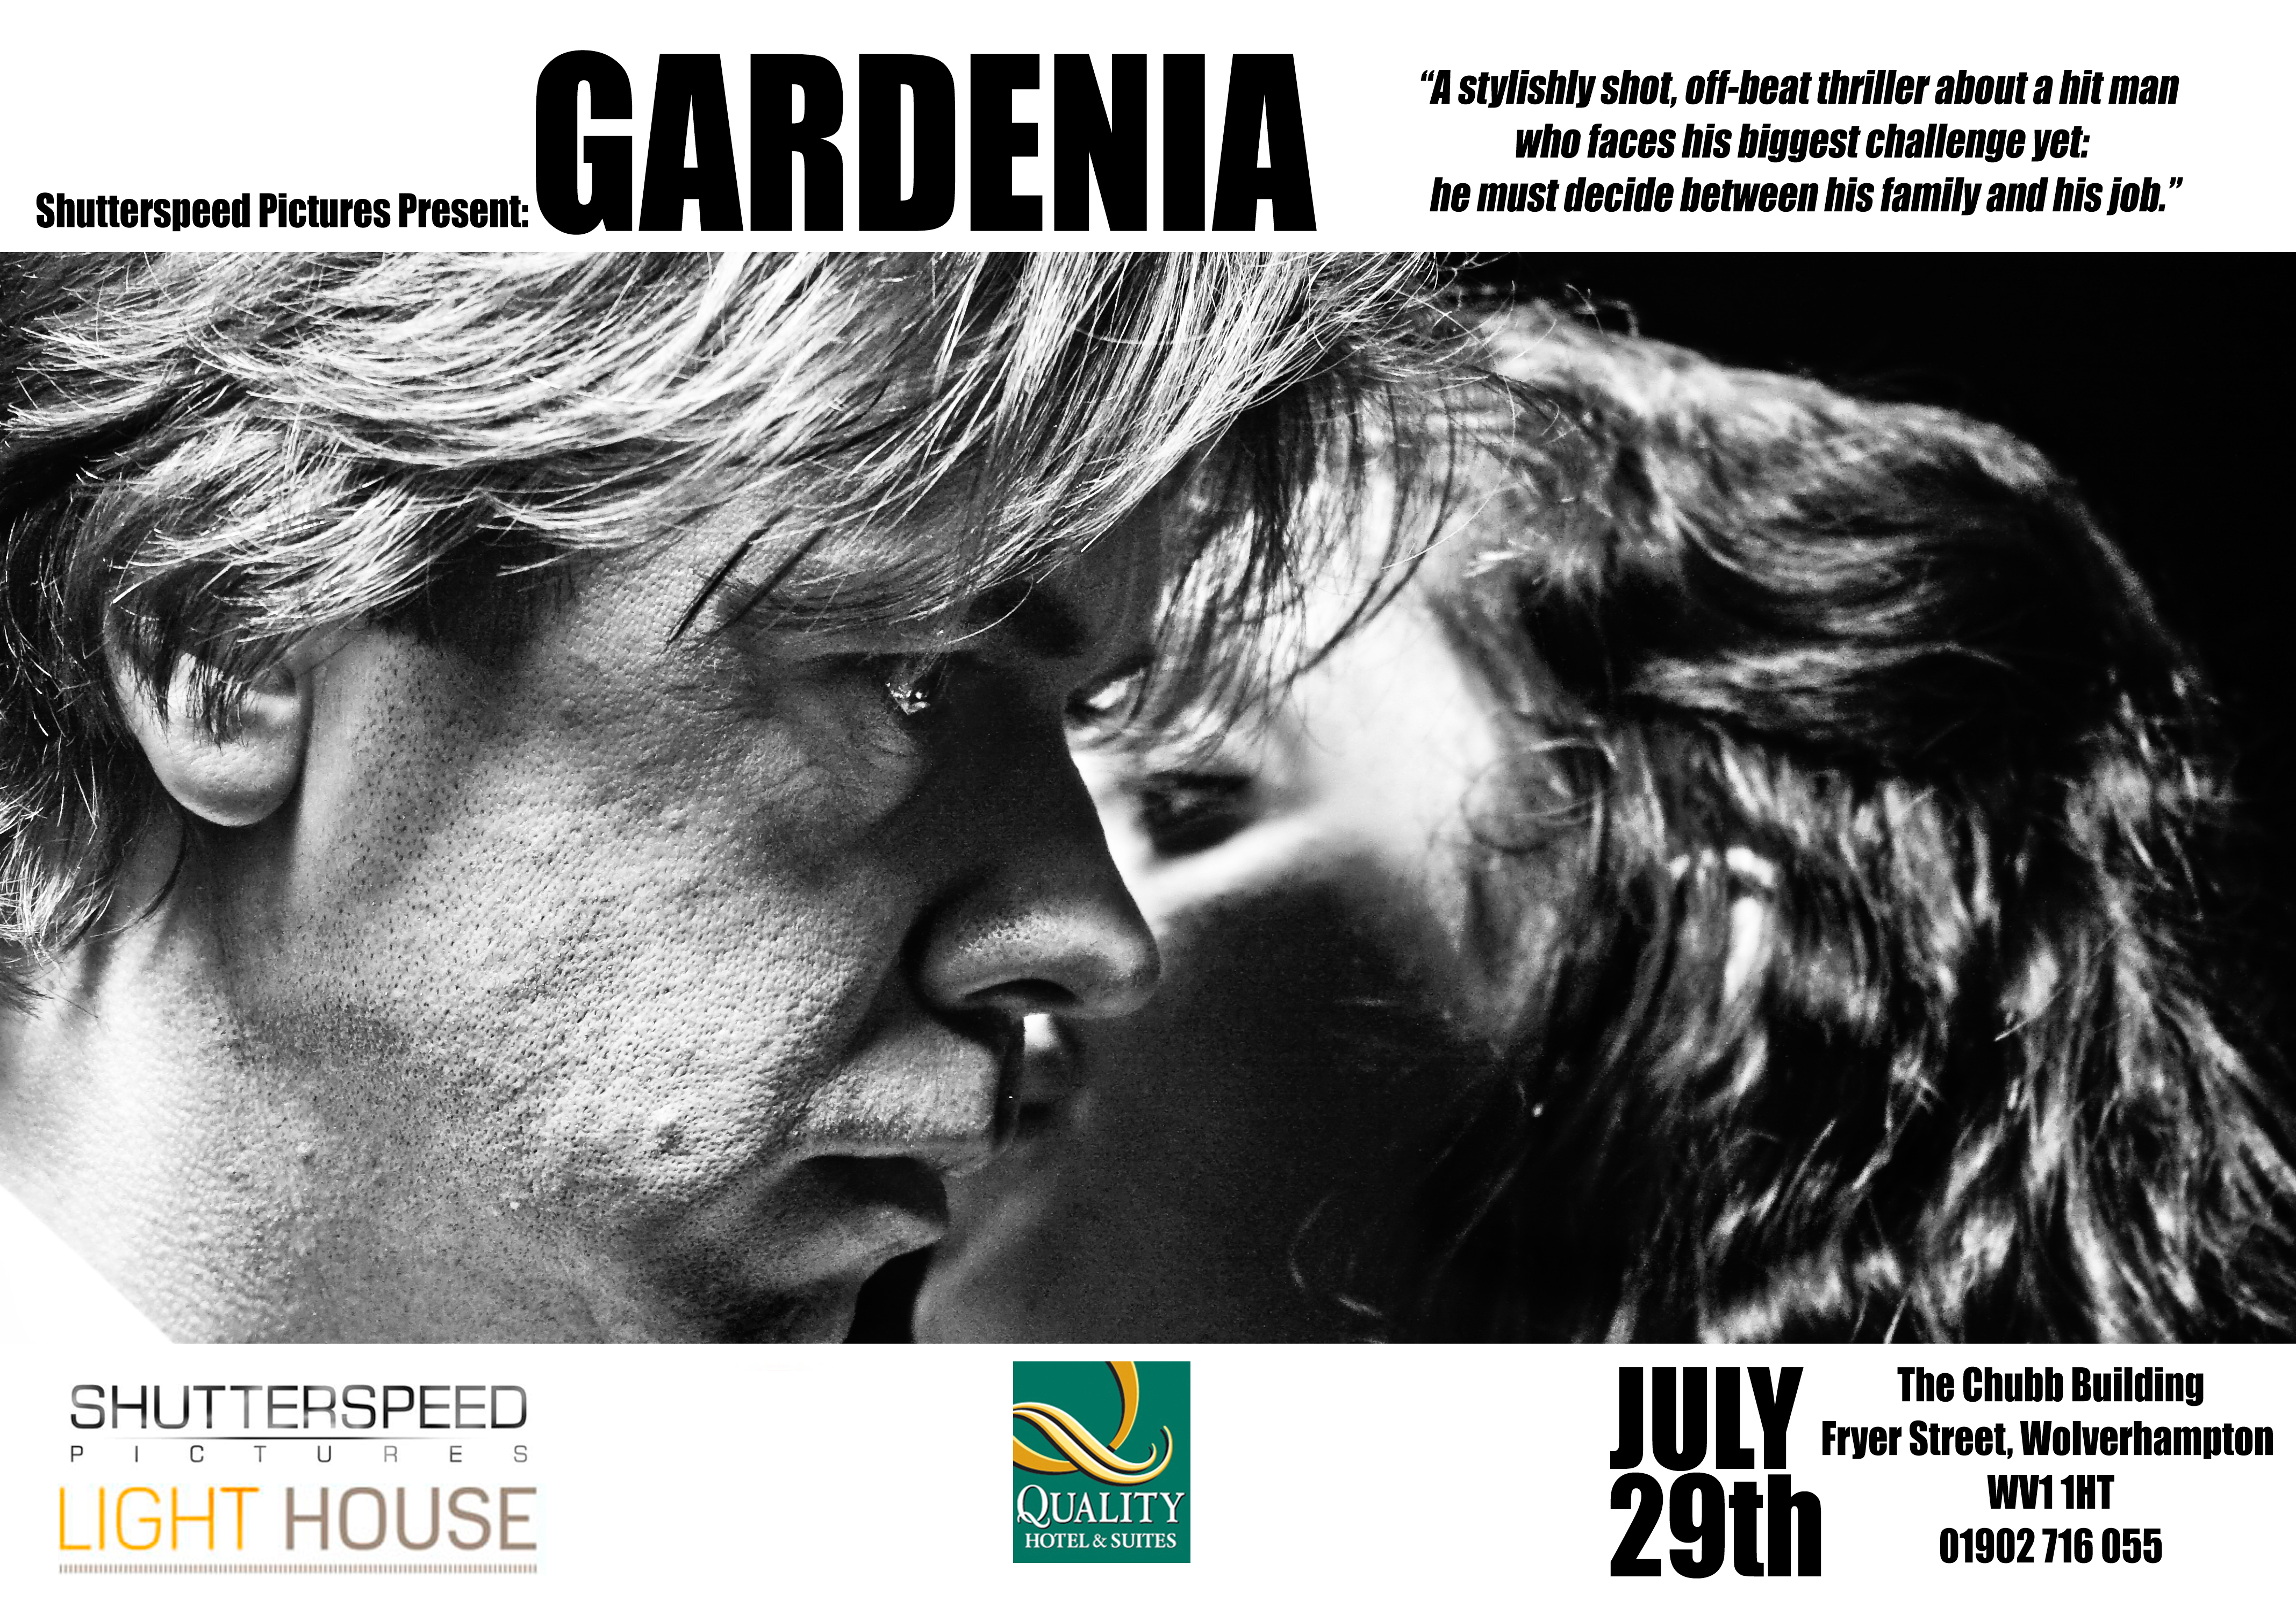 'Gardenia' Premiere Promotional Poster